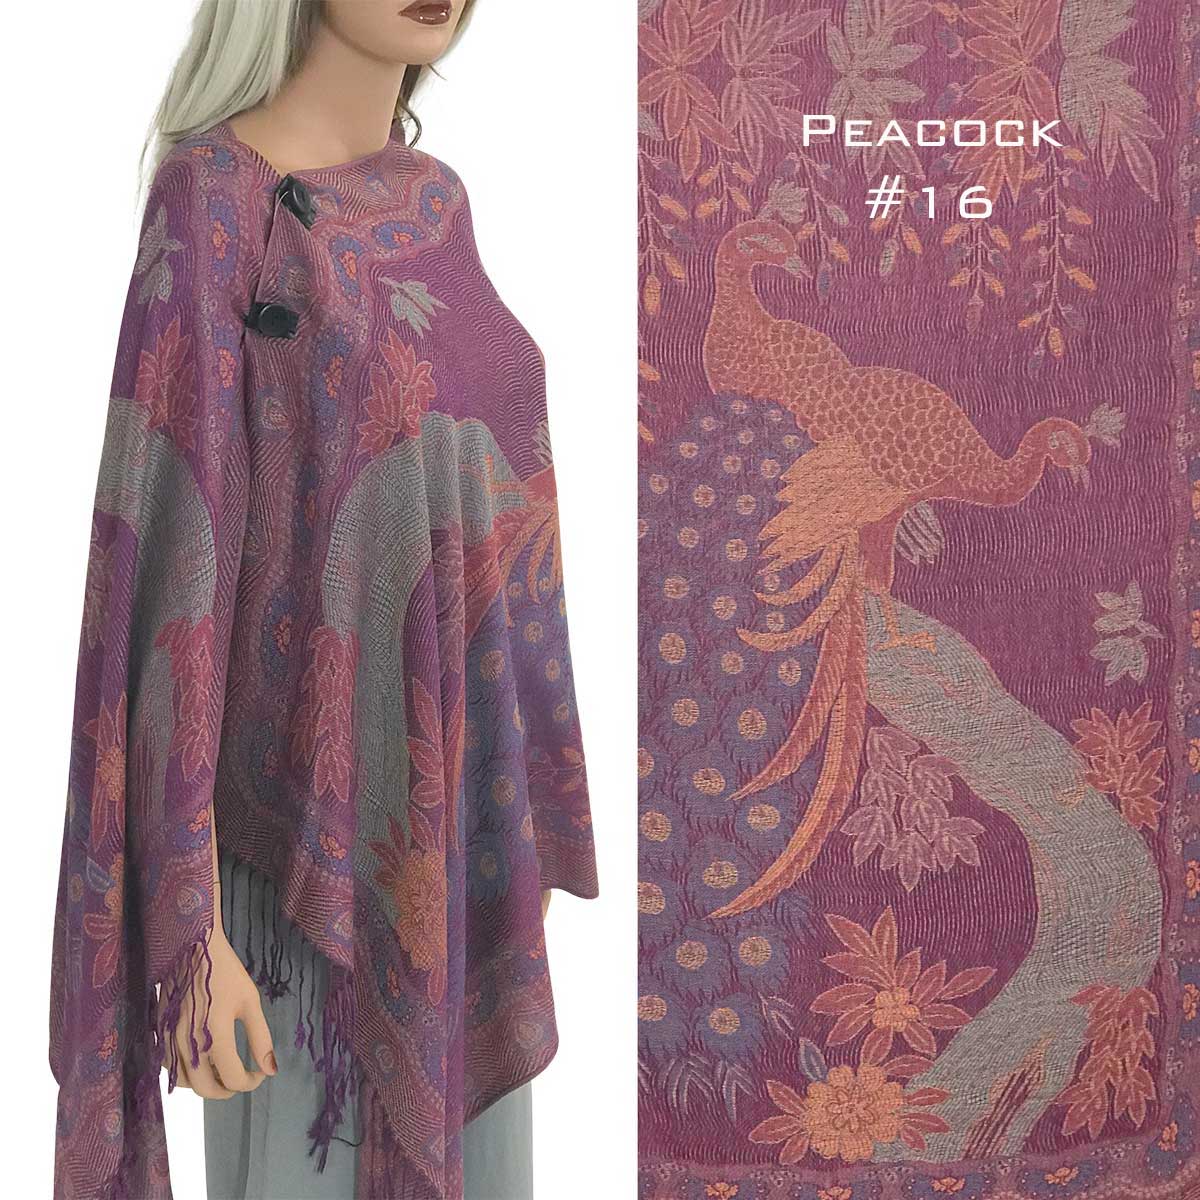 Peacock - #16<br>
Pashmina Style Button Shawl